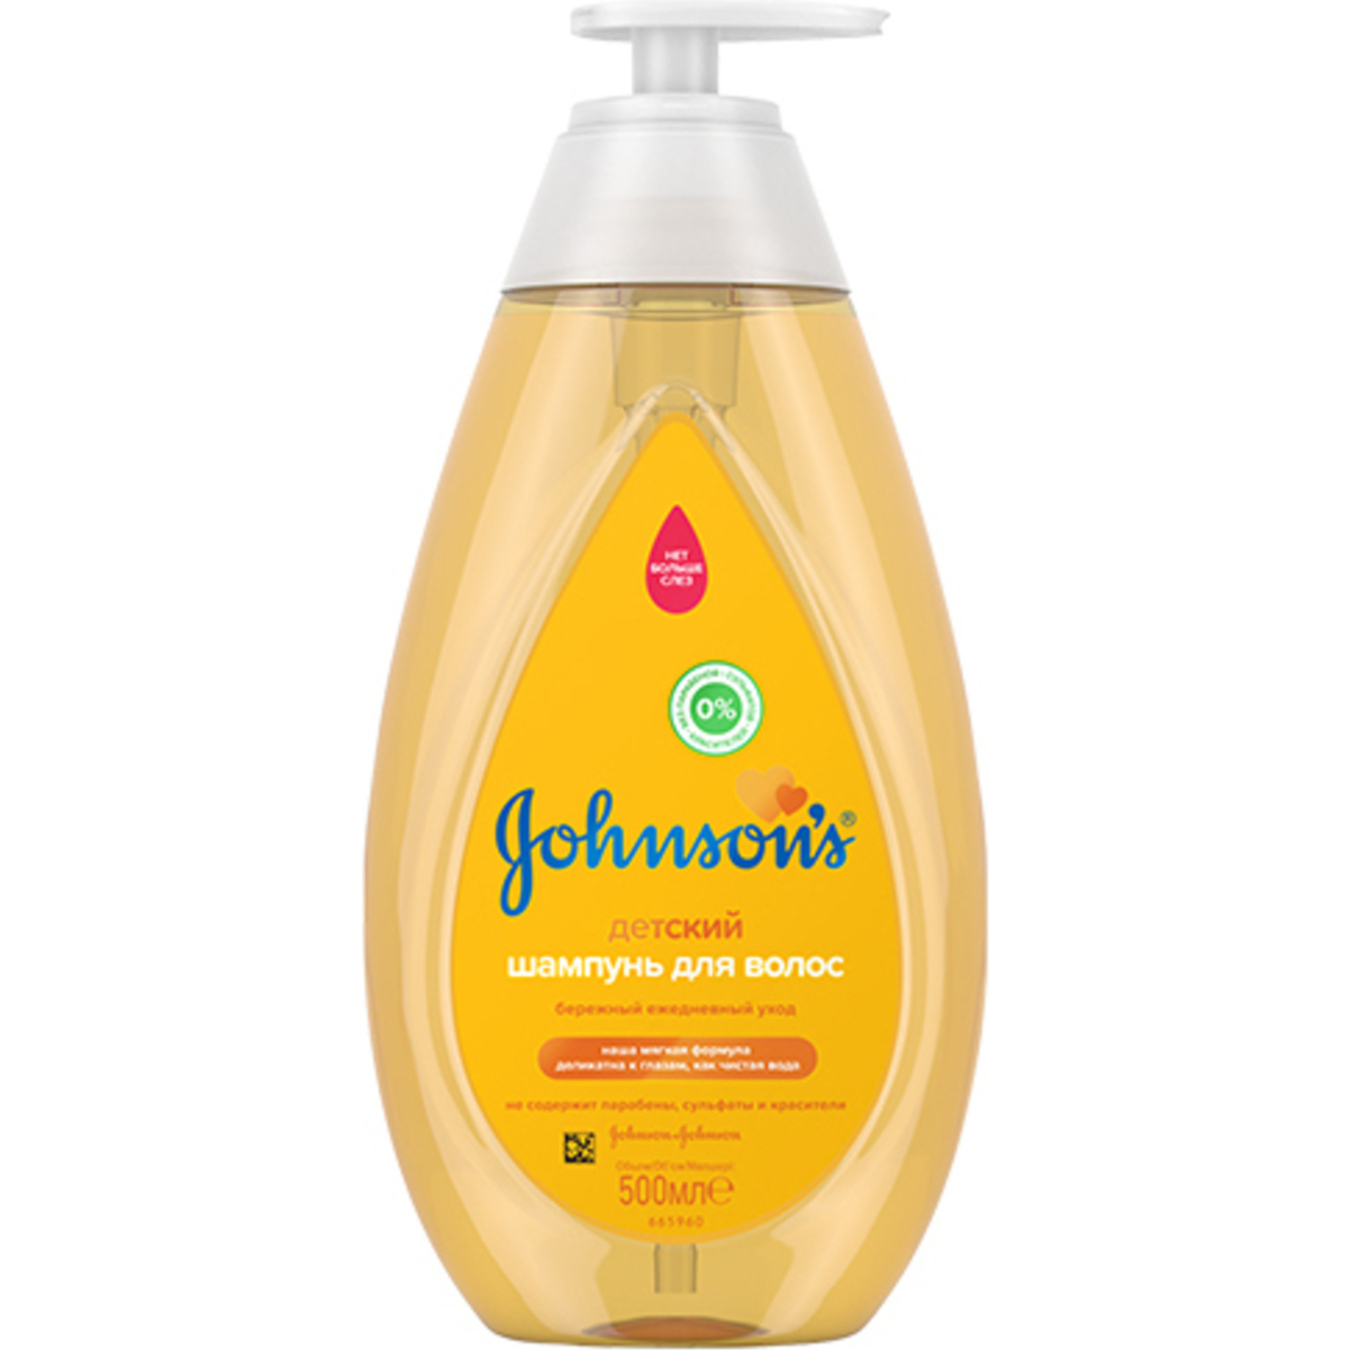 Johnson's baby shampoo for children 500 ml